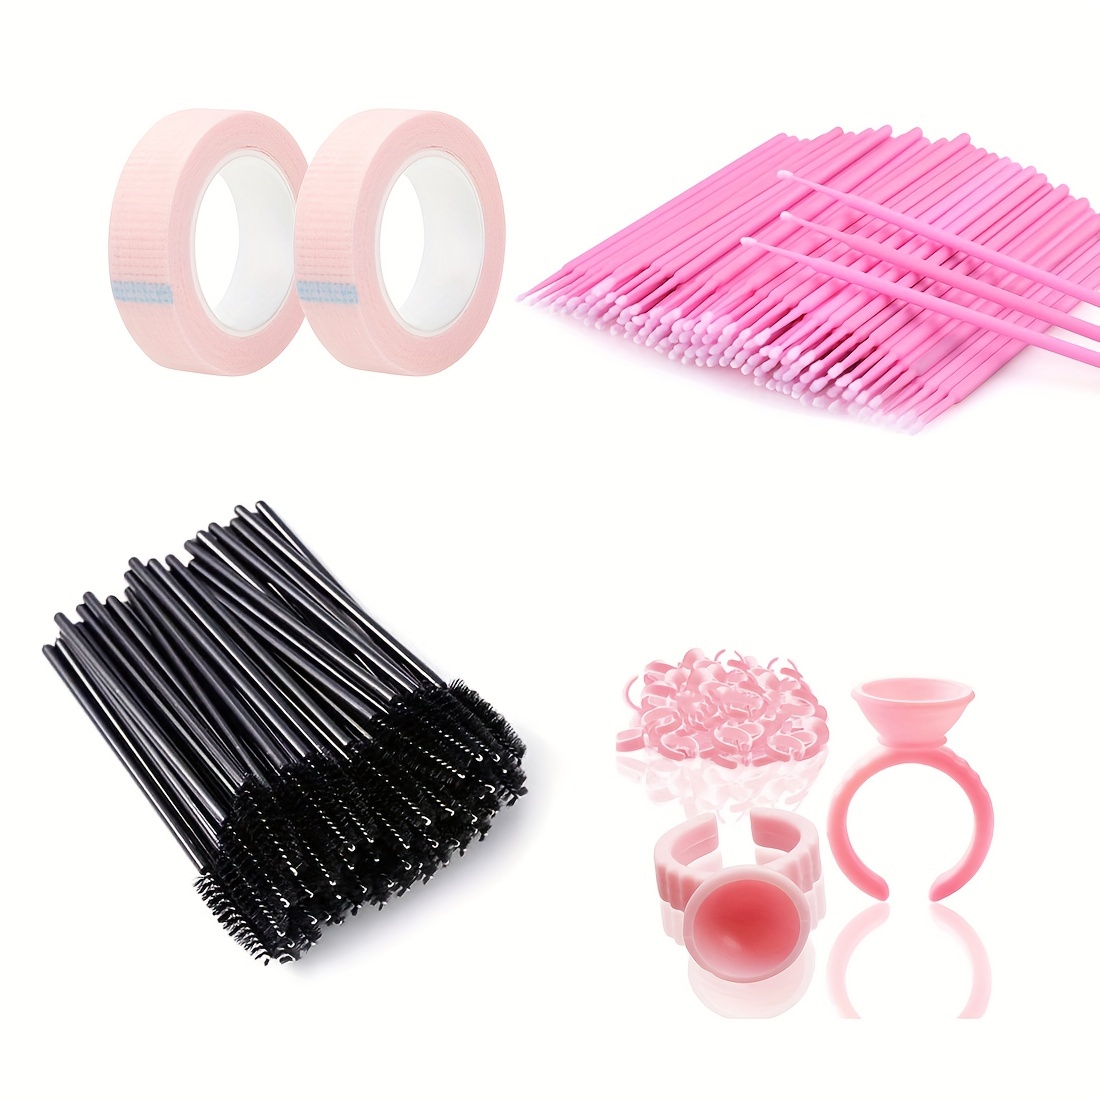 Lash Supplies - Disposable Brushes/Applicators